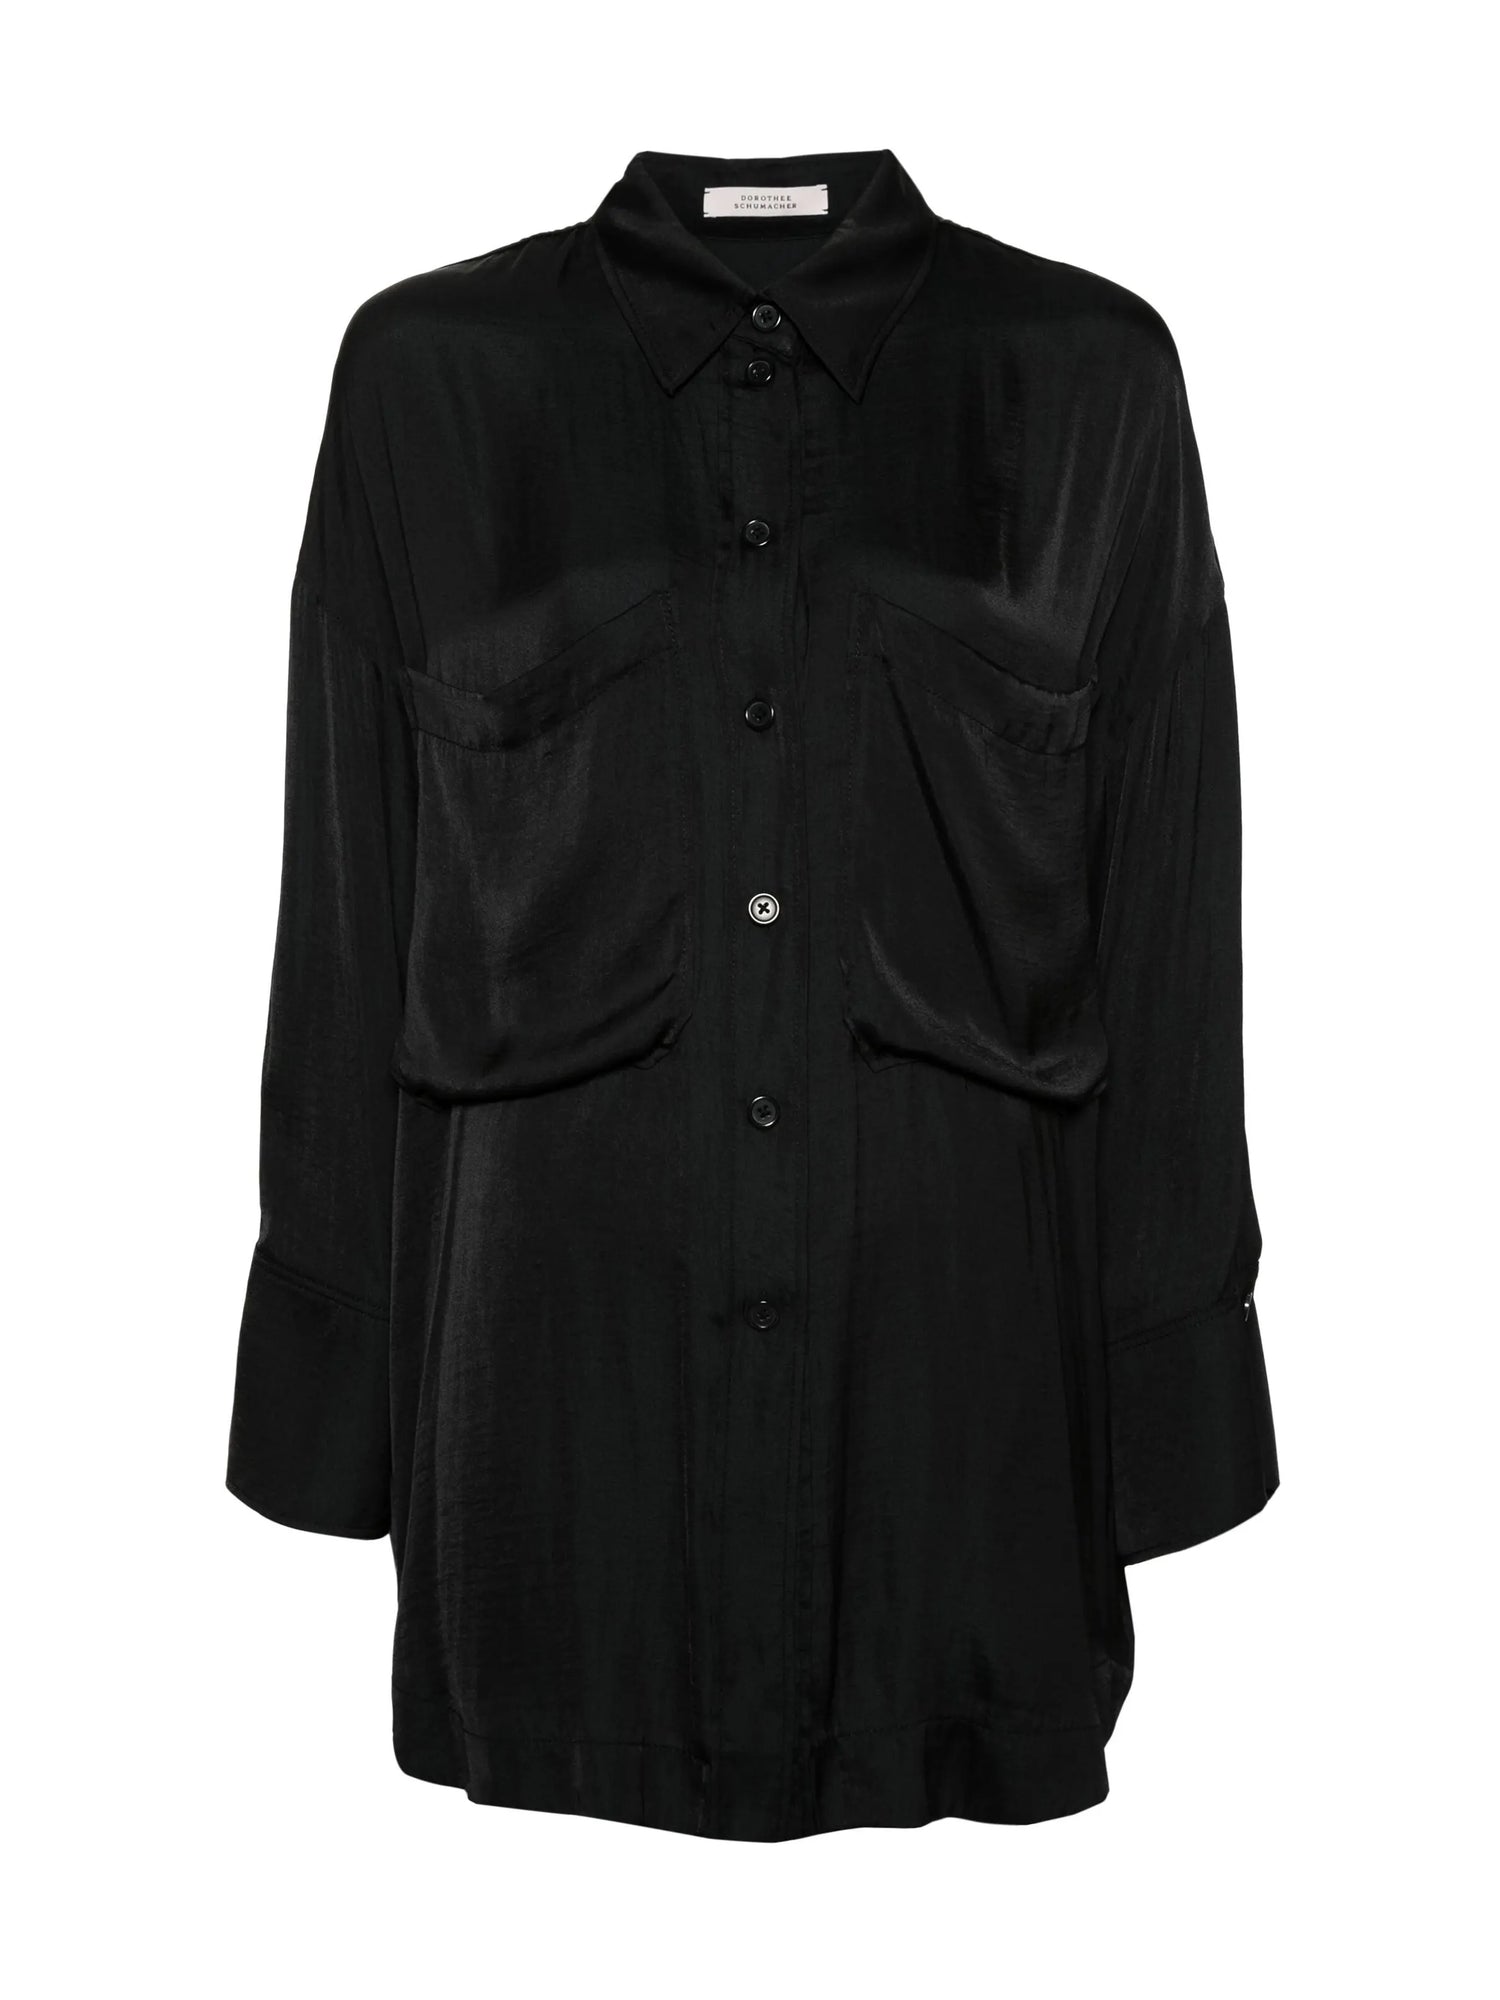 TRANSPARENT FANTASY blouse, black